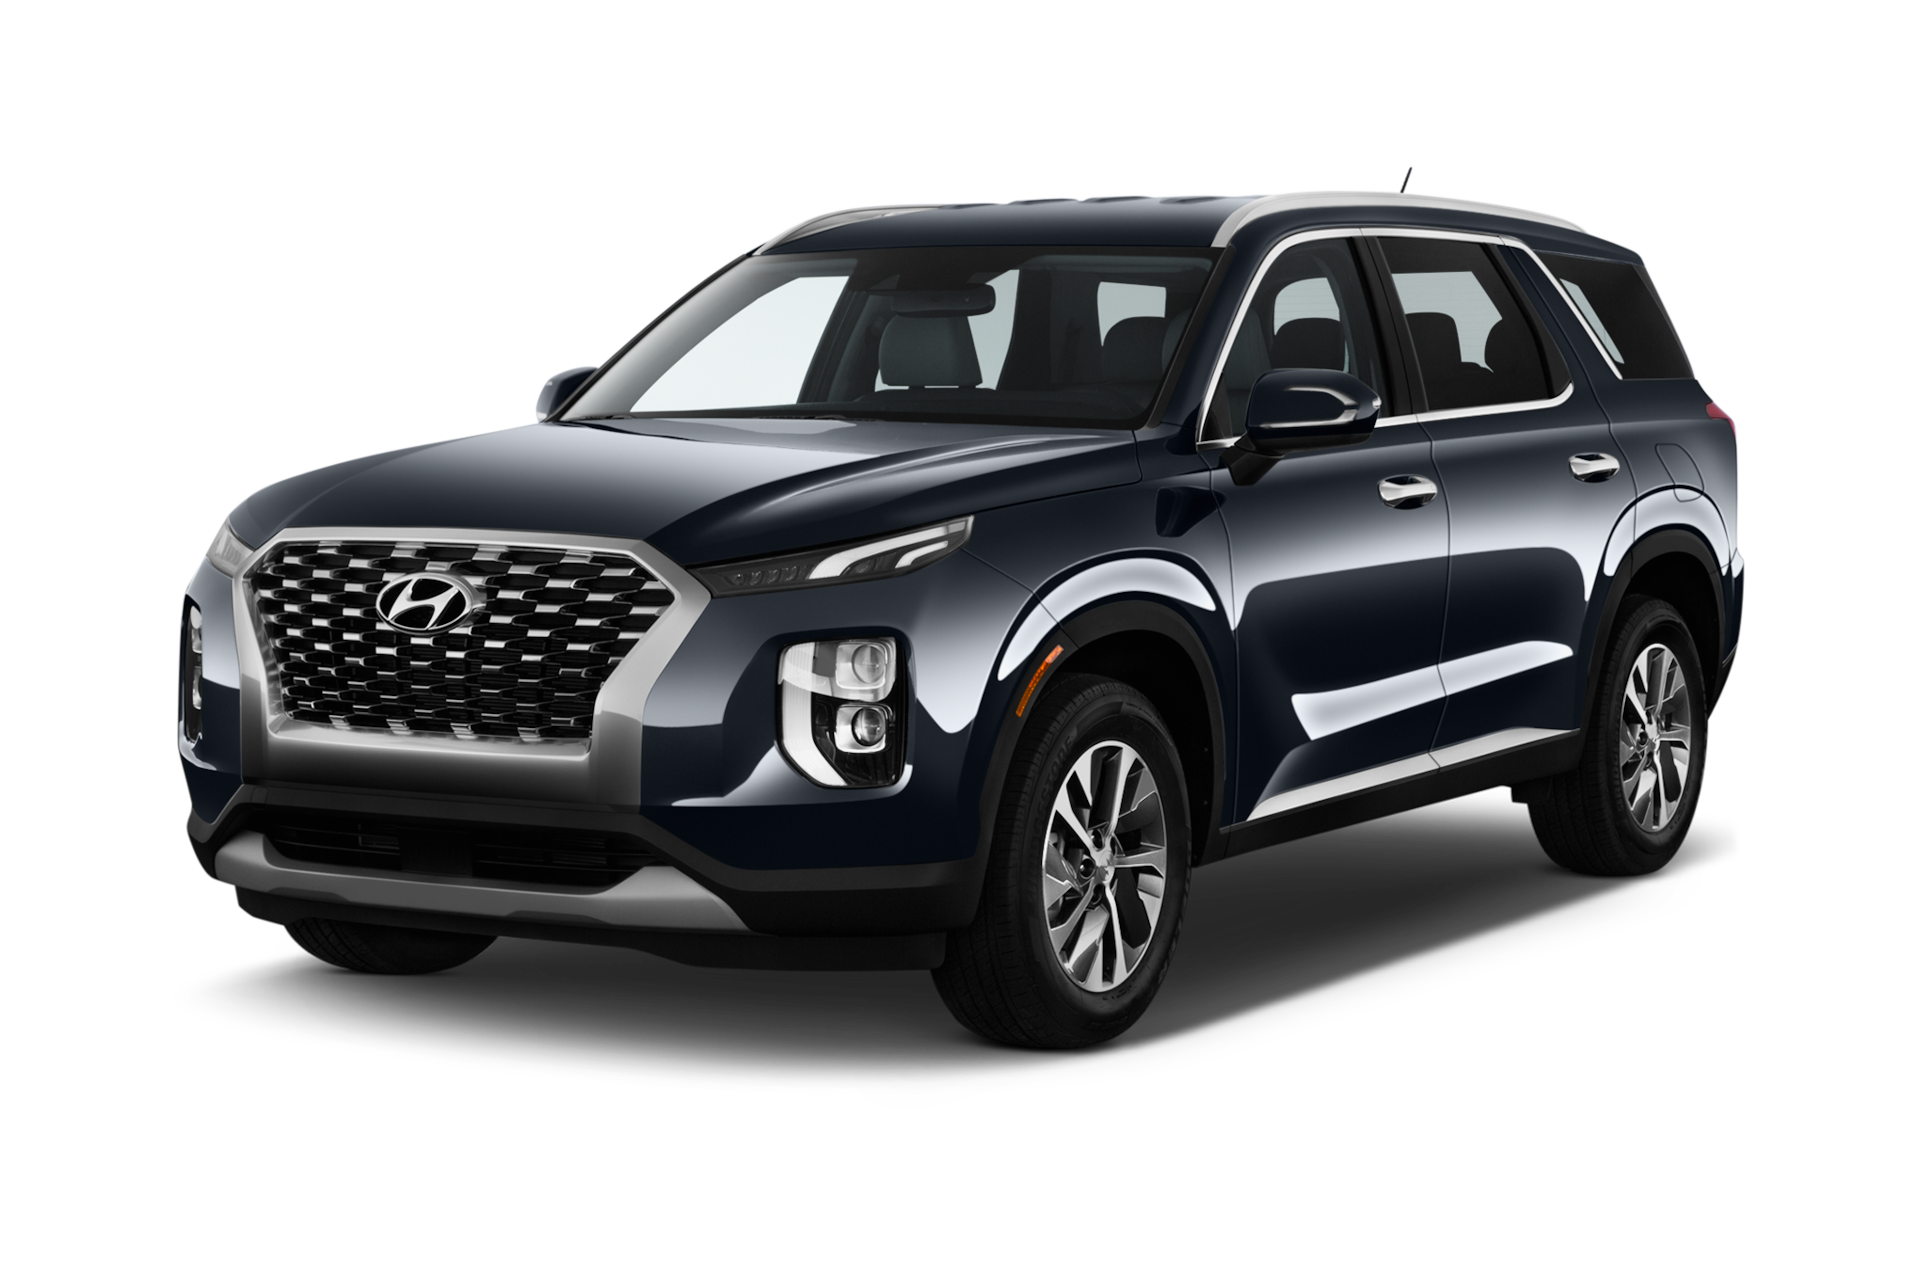 2020 Hyundai Palisade Prices, Reviews, and Photos - MotorTrend